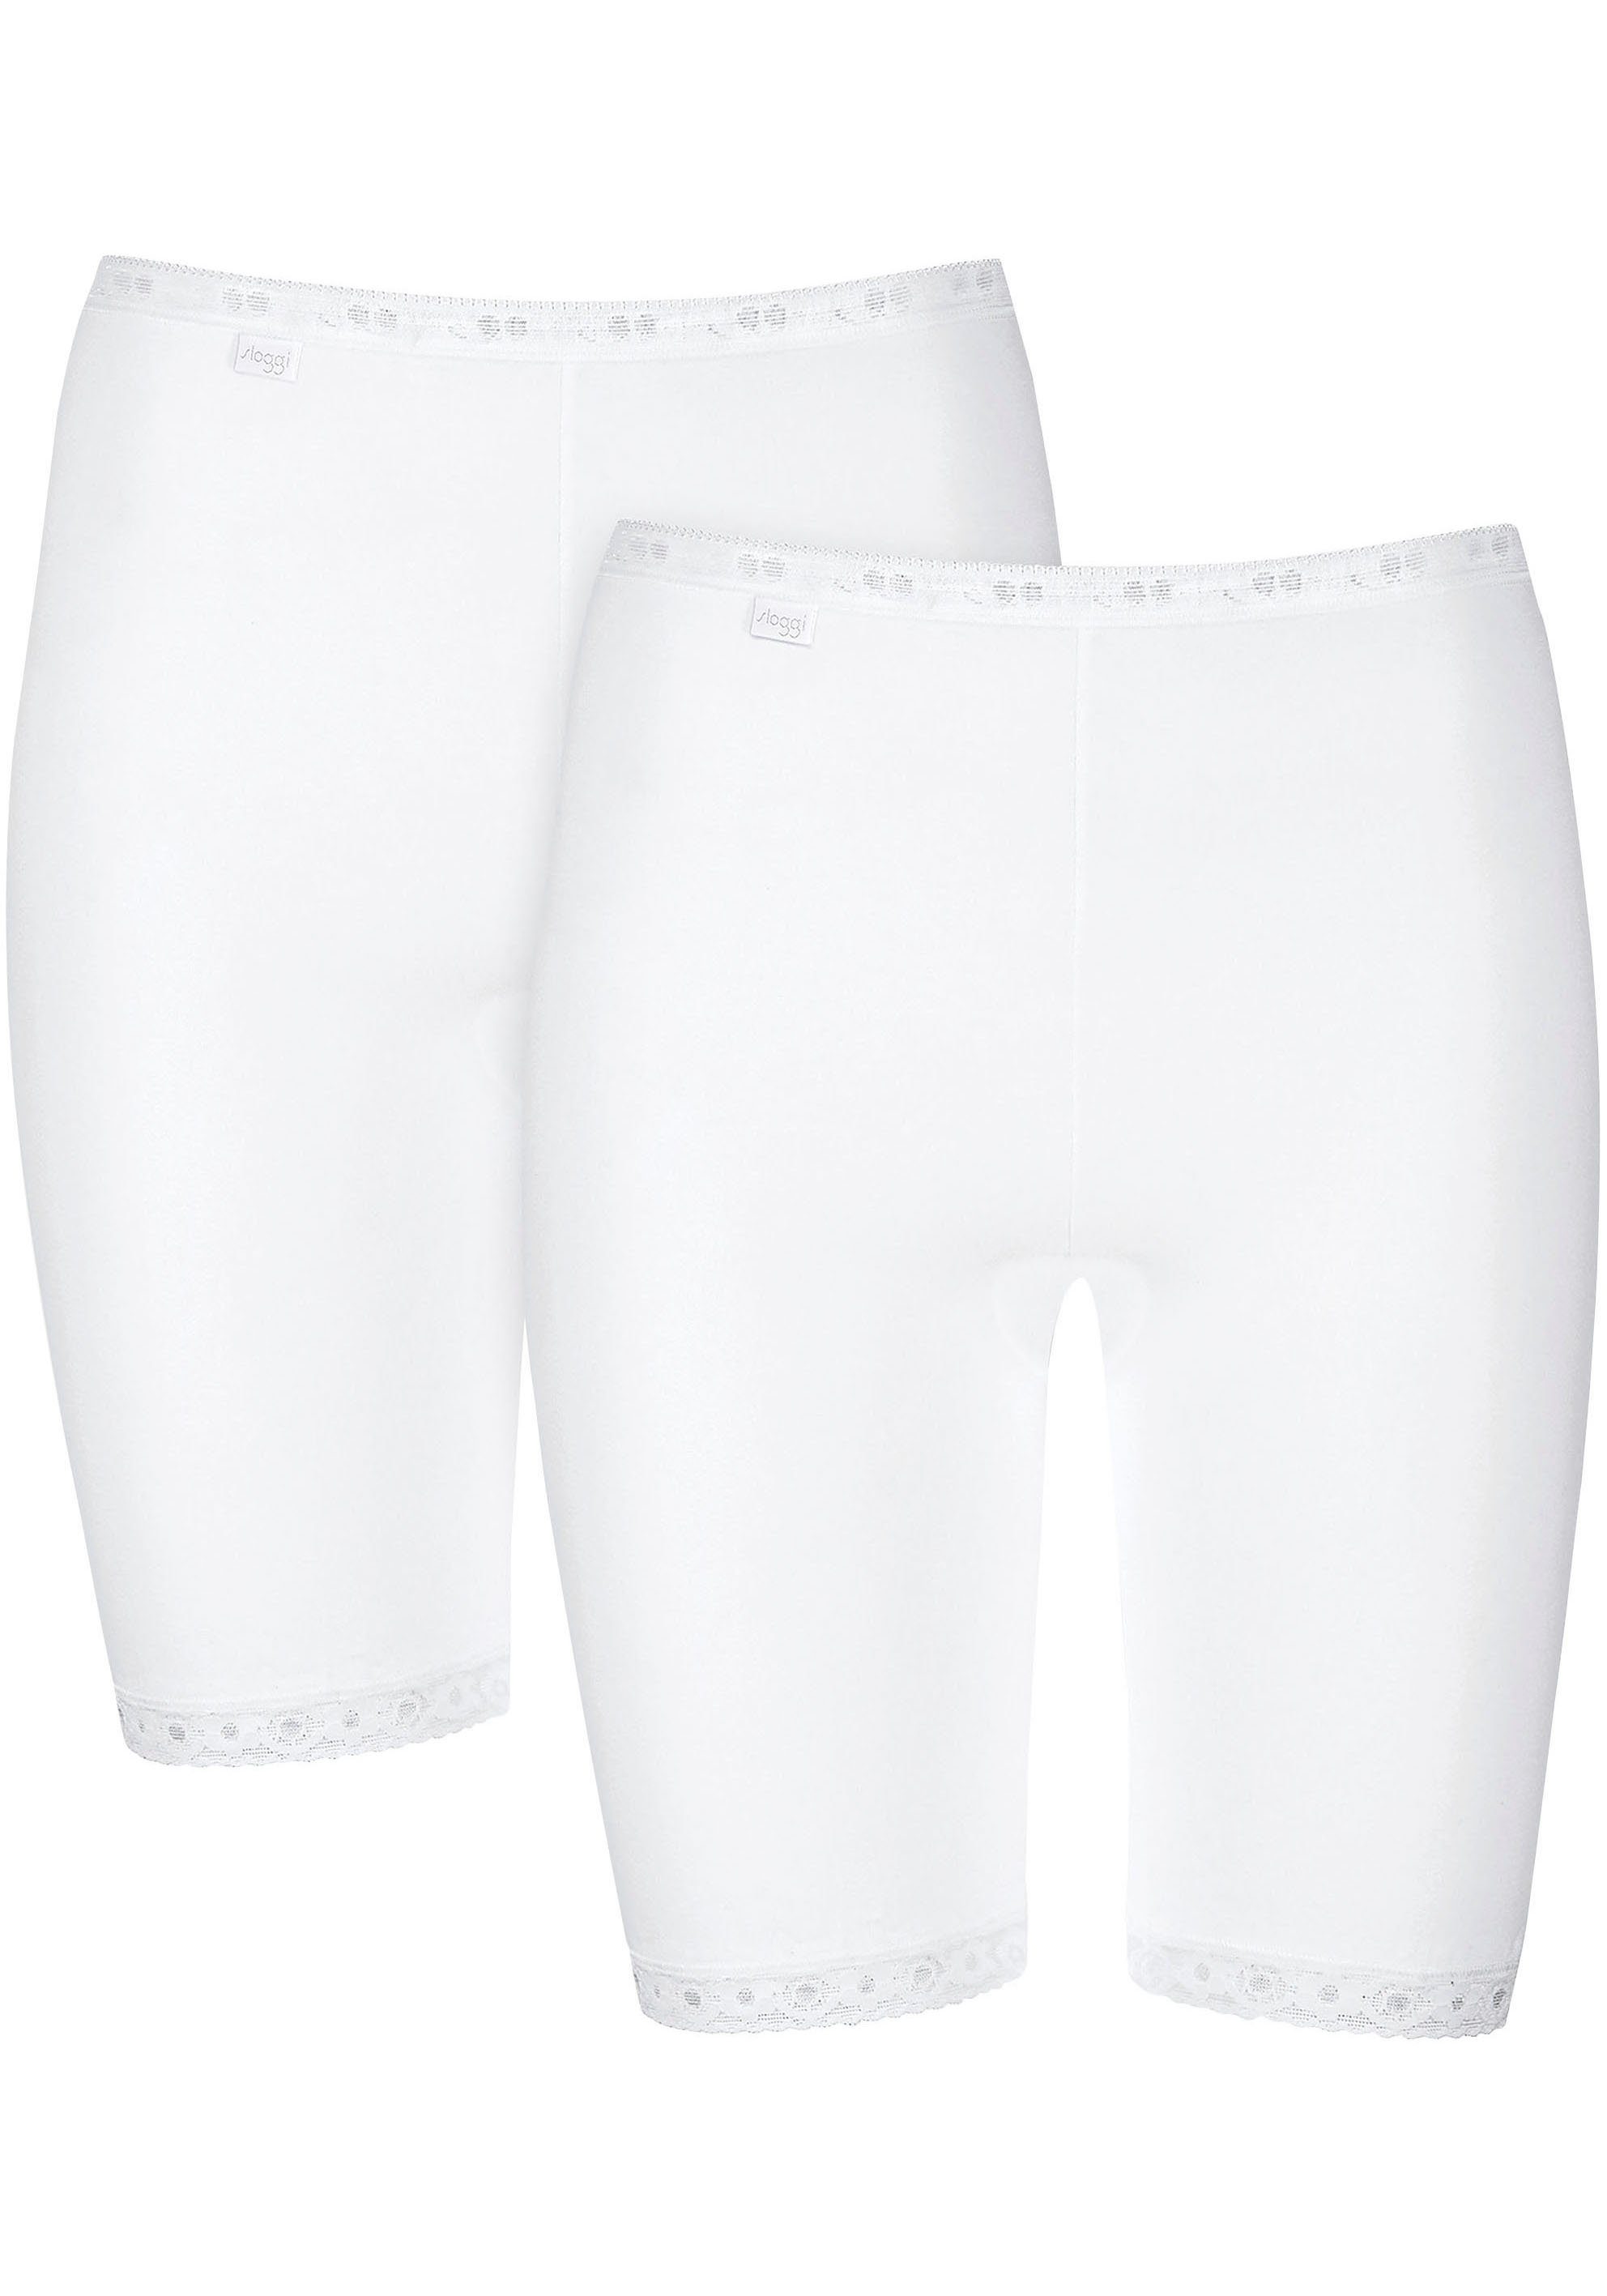 sloggi Lange Unterhose Basic+ Long 2P (Packung, 2-St) Long-Pants mit Spitzenbesatz